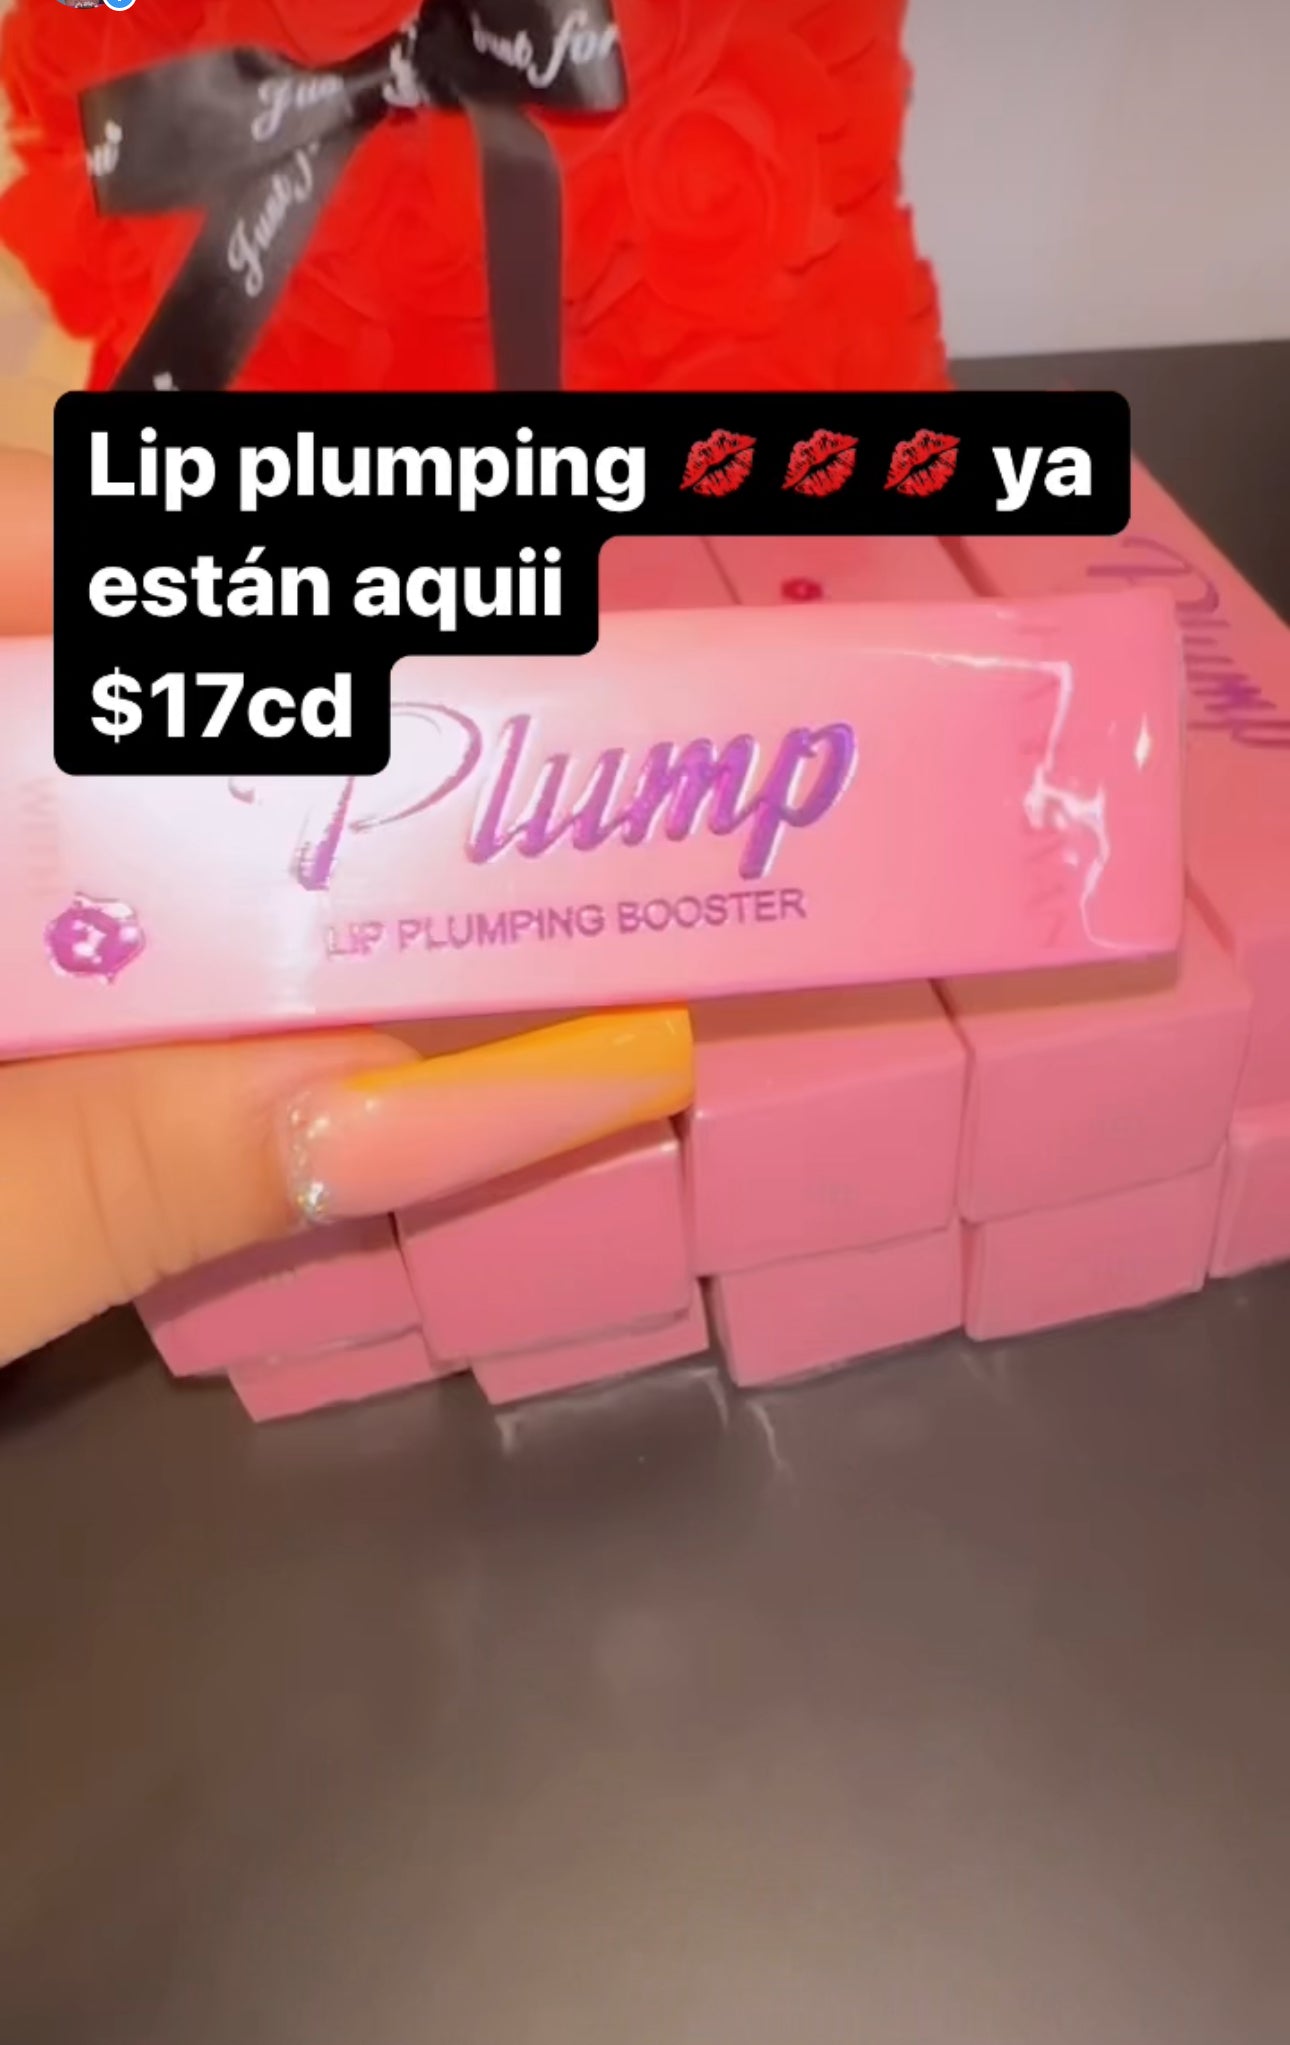 “Lip plumping “